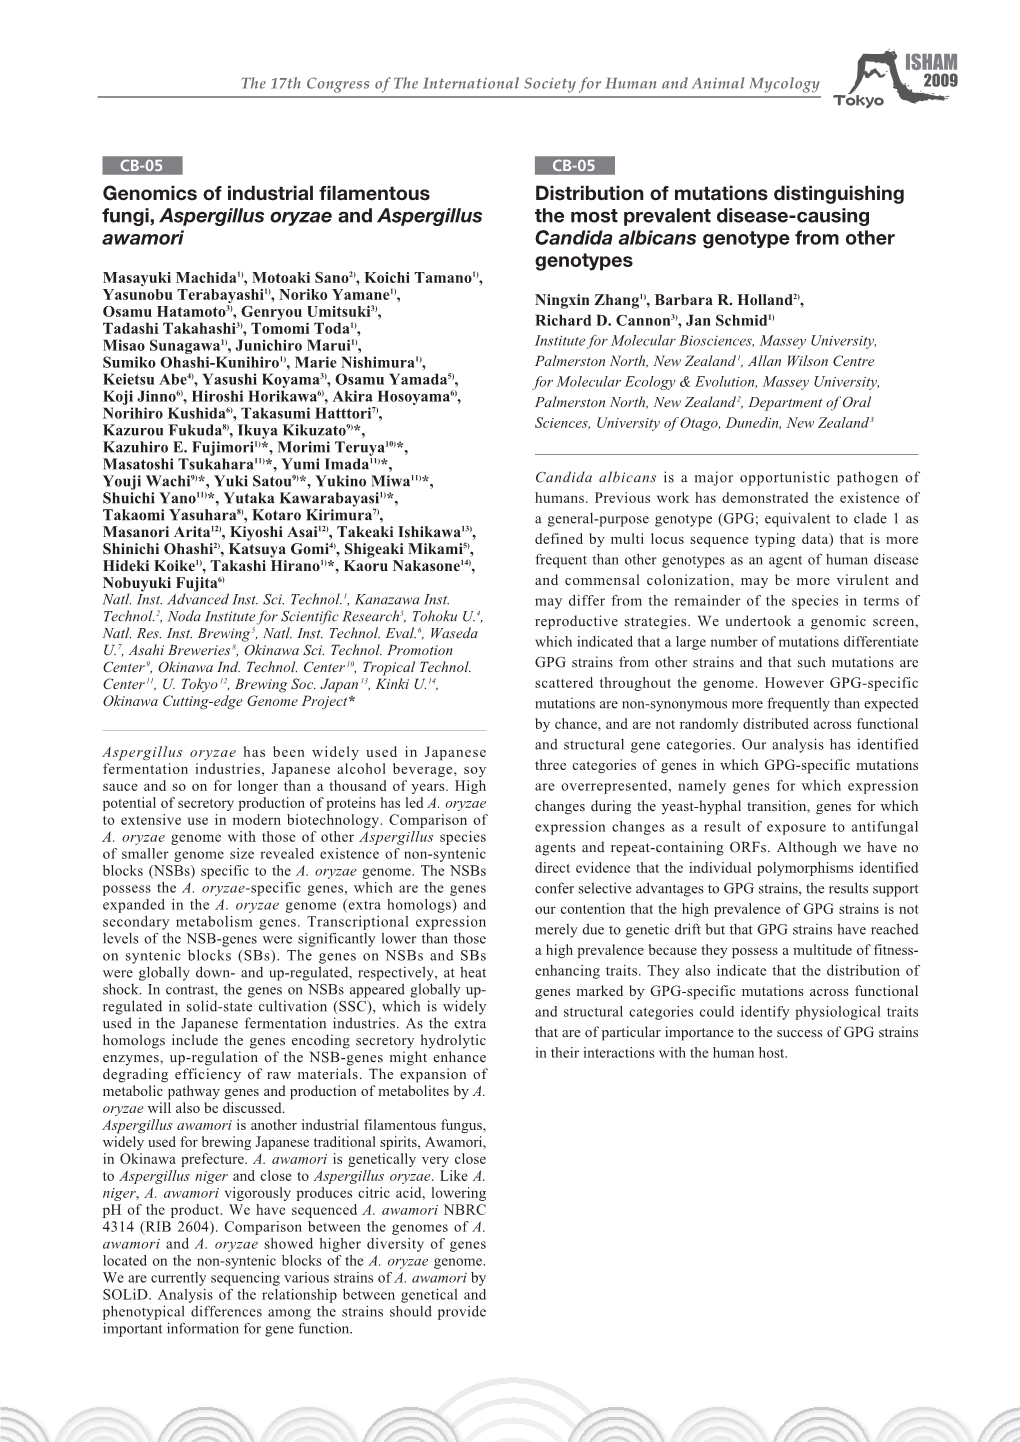 Genomics of Industrial Filamentous Fungi, Aspergillus Oryzae And